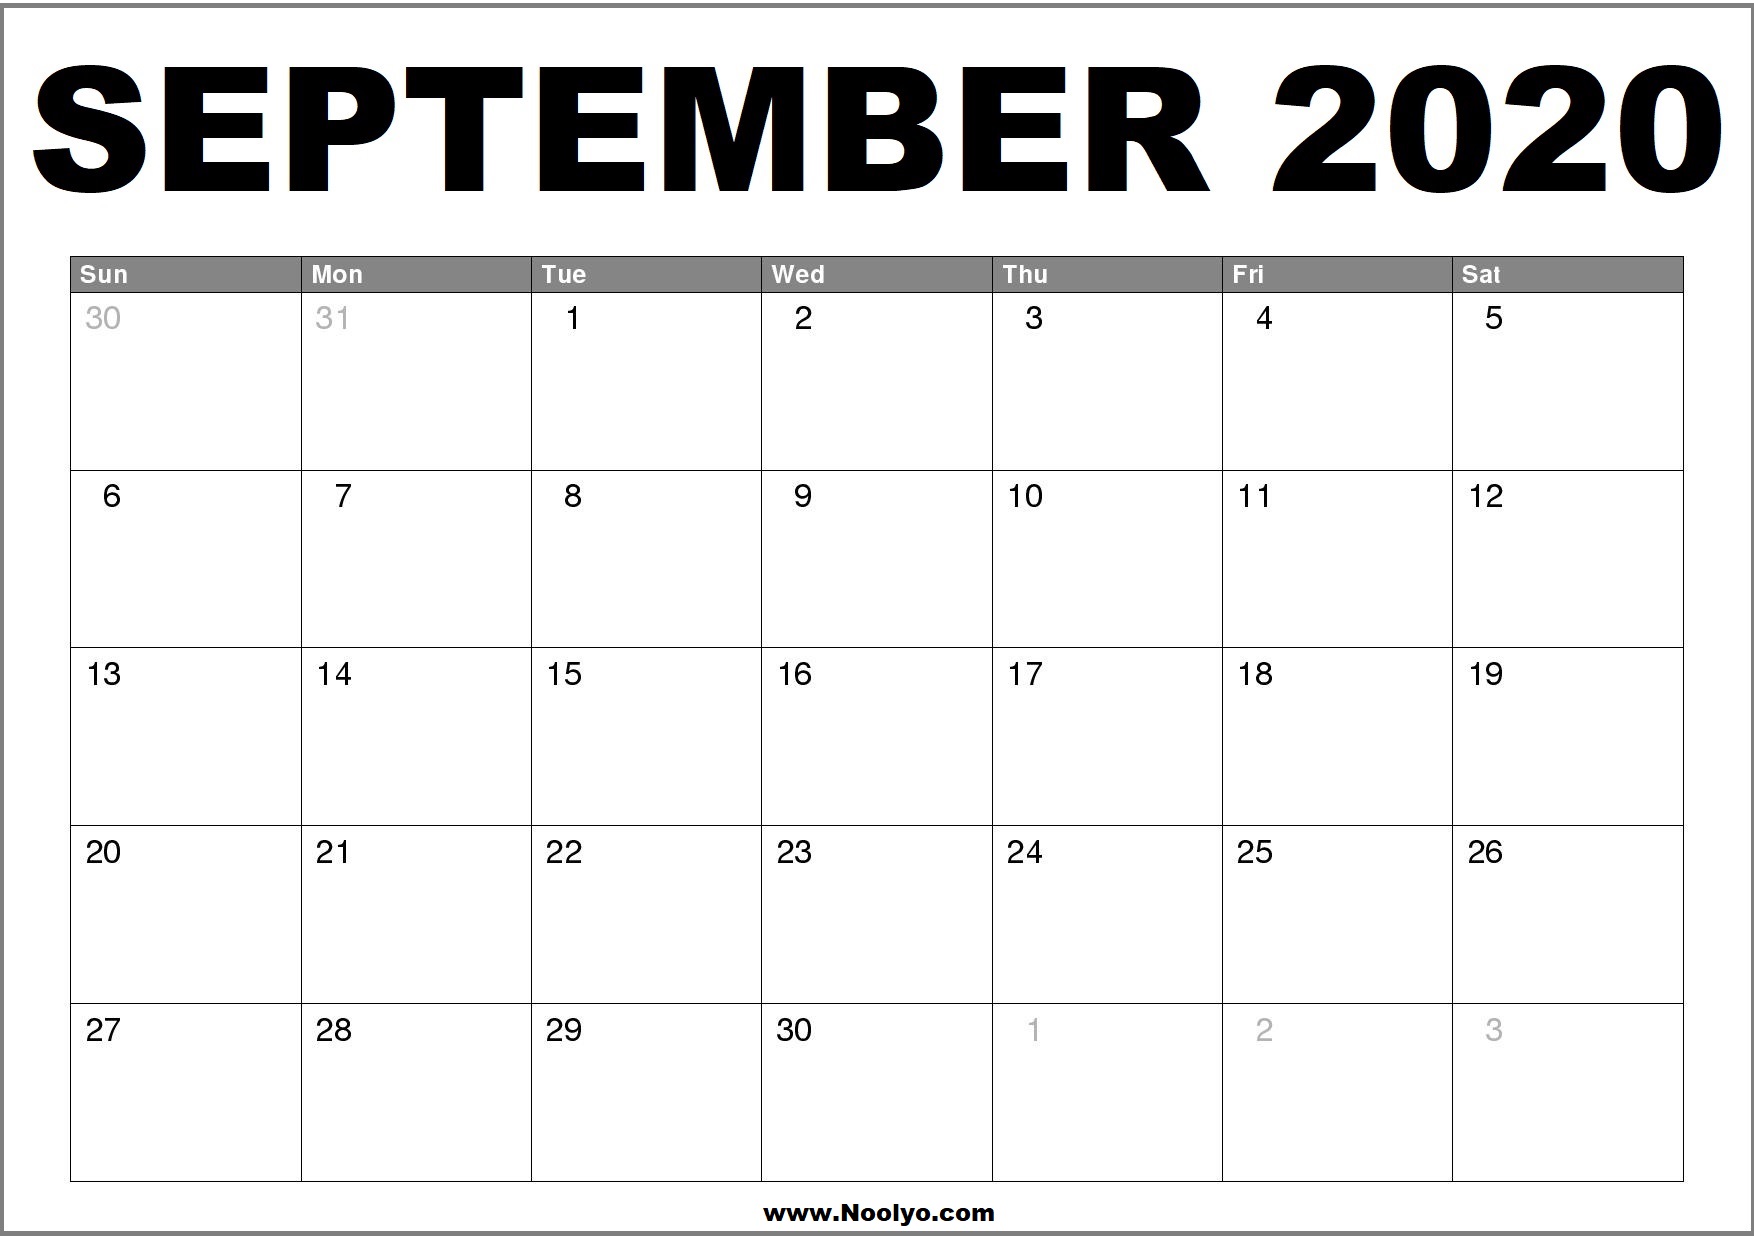 September 2020 Calendar Printable – Free Download